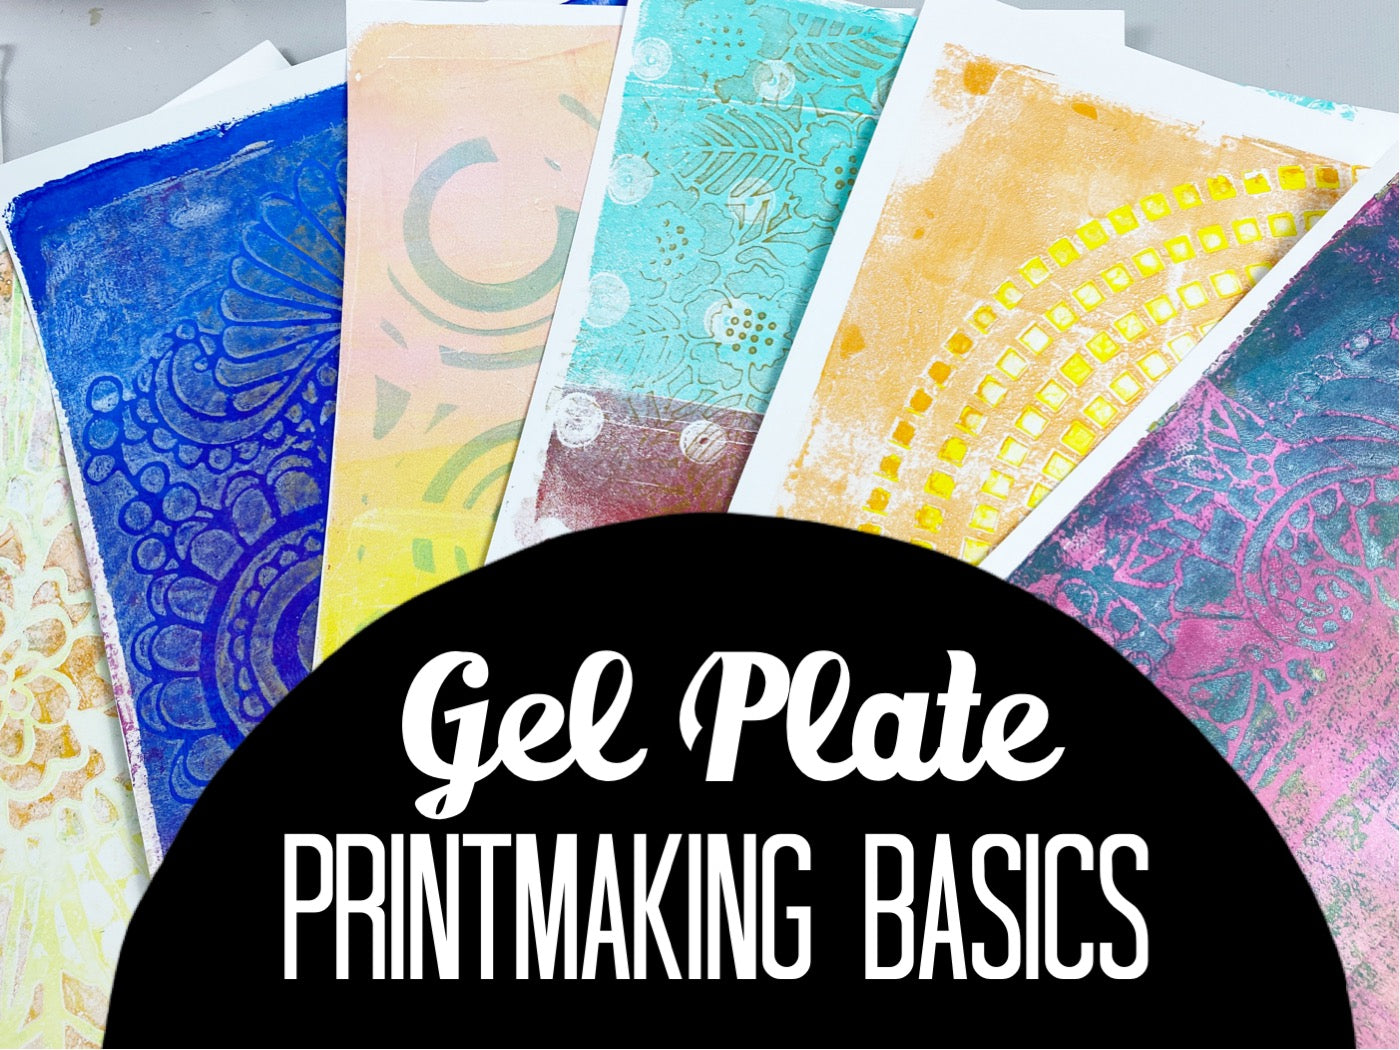 Gel Plate Printmaking- The Basics Workshop